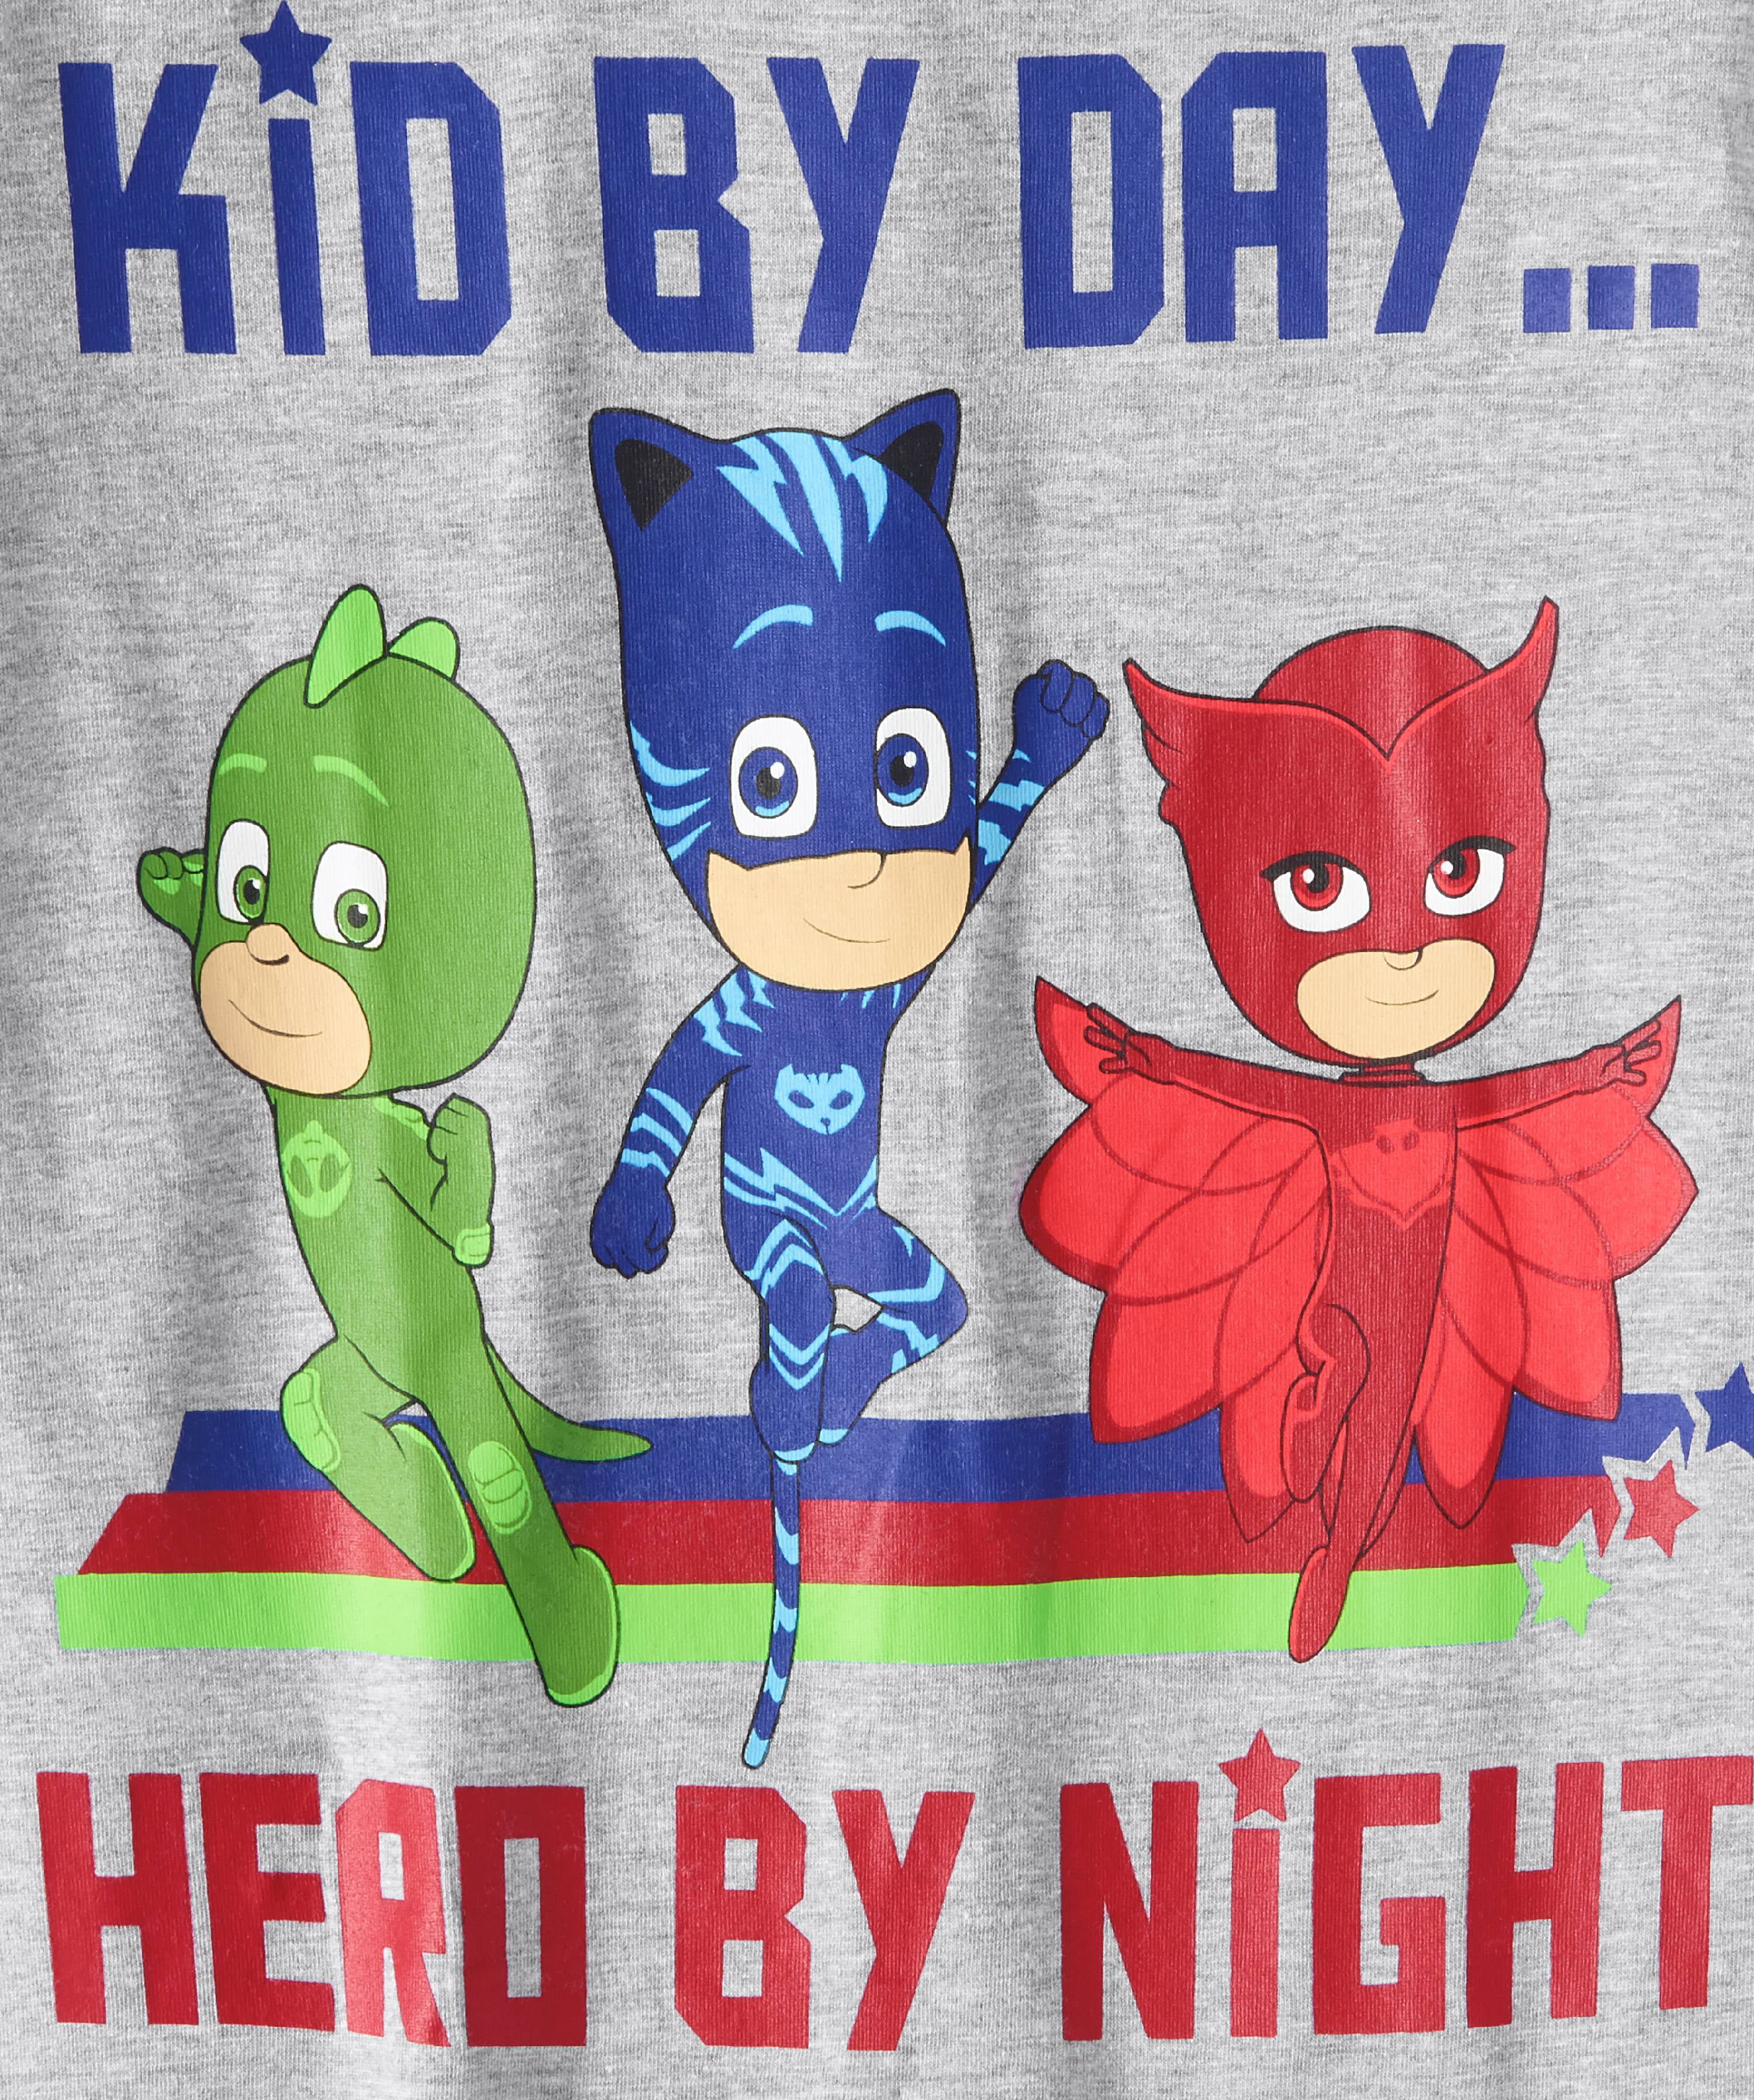 Hero by Night PJ Masks Boys Short Sleeve T-Shirt Gray 5/6 Kid by Day 4-7 